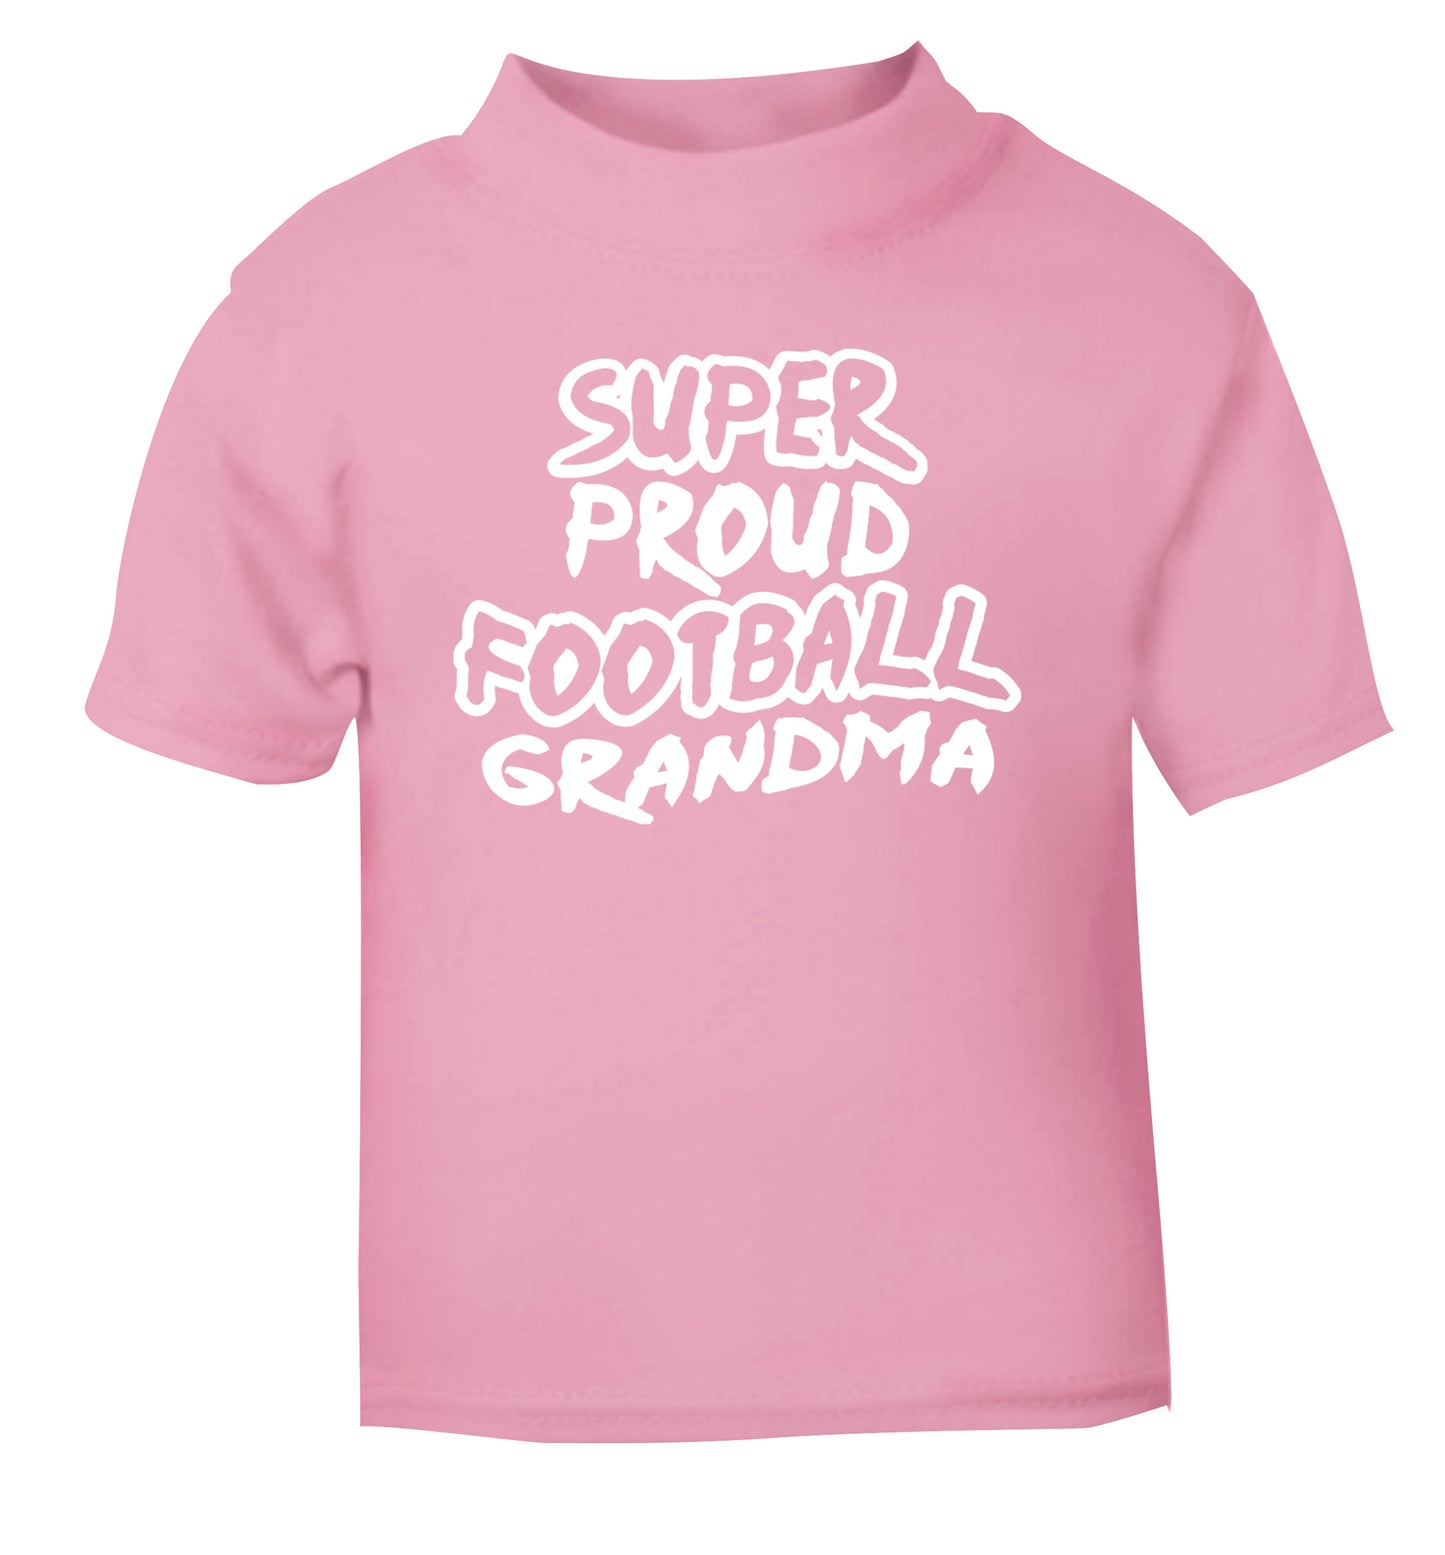 Super proud football grandma light pink Baby Toddler Tshirt 2 Years